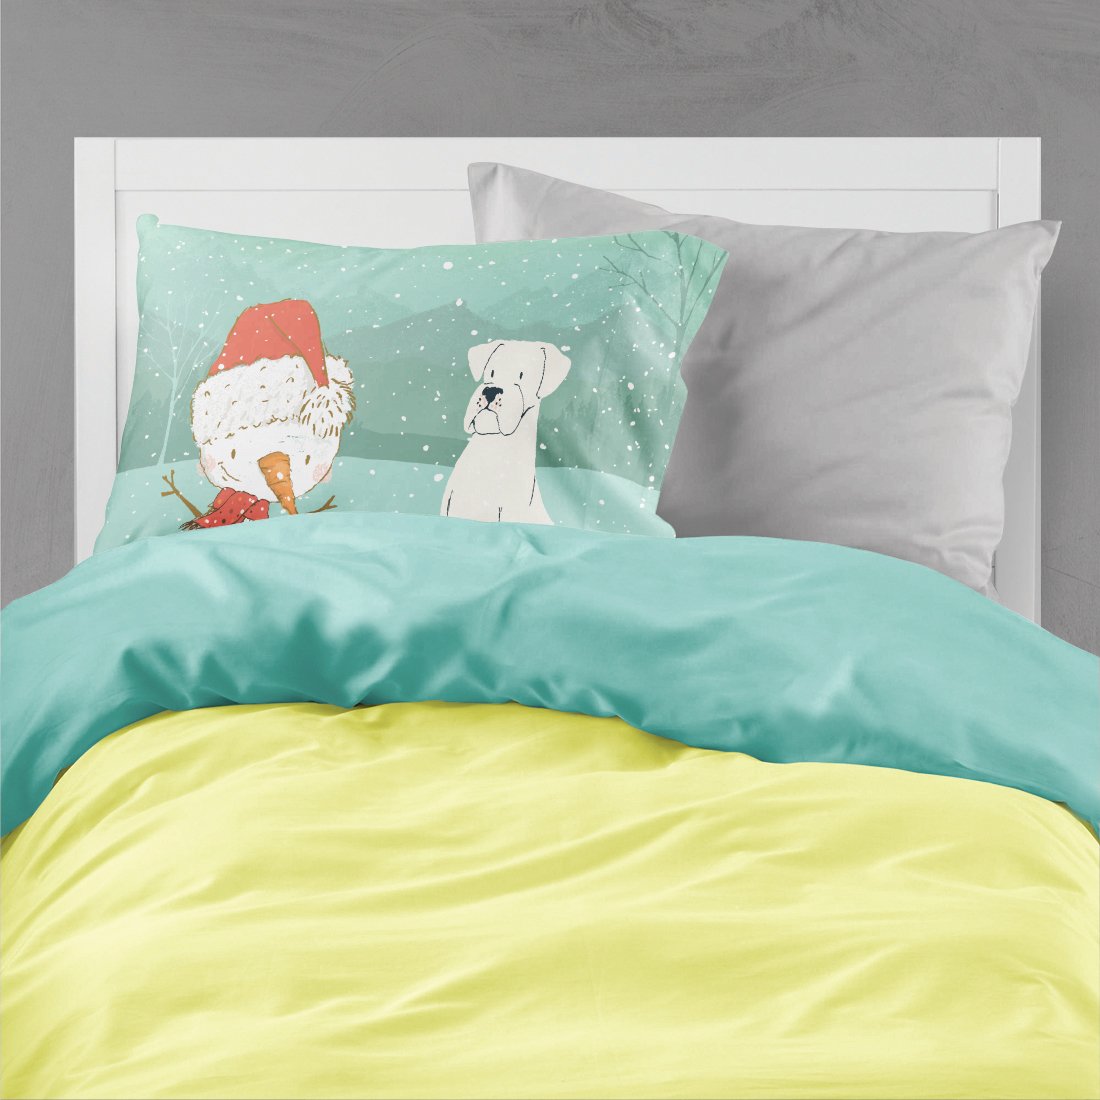 White Boxer and Snowman Christmas Fabric Standard Pillowcase CK2034PILLOWCASE by Caroline's Treasures